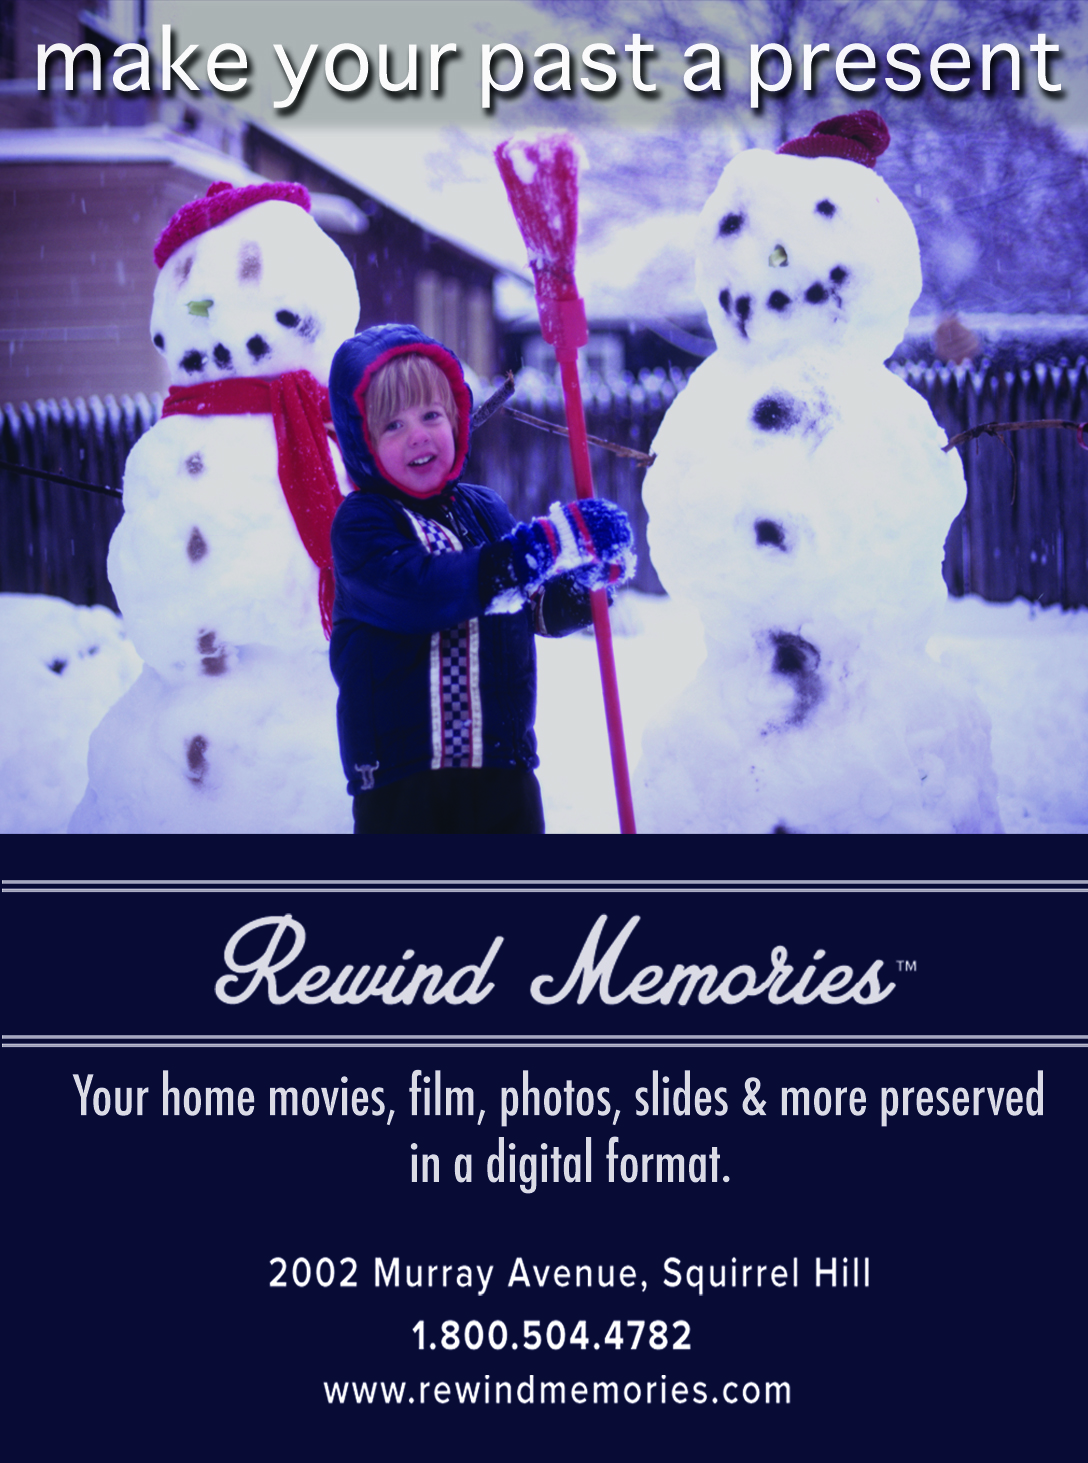 Rewind Memories Holiday 2015